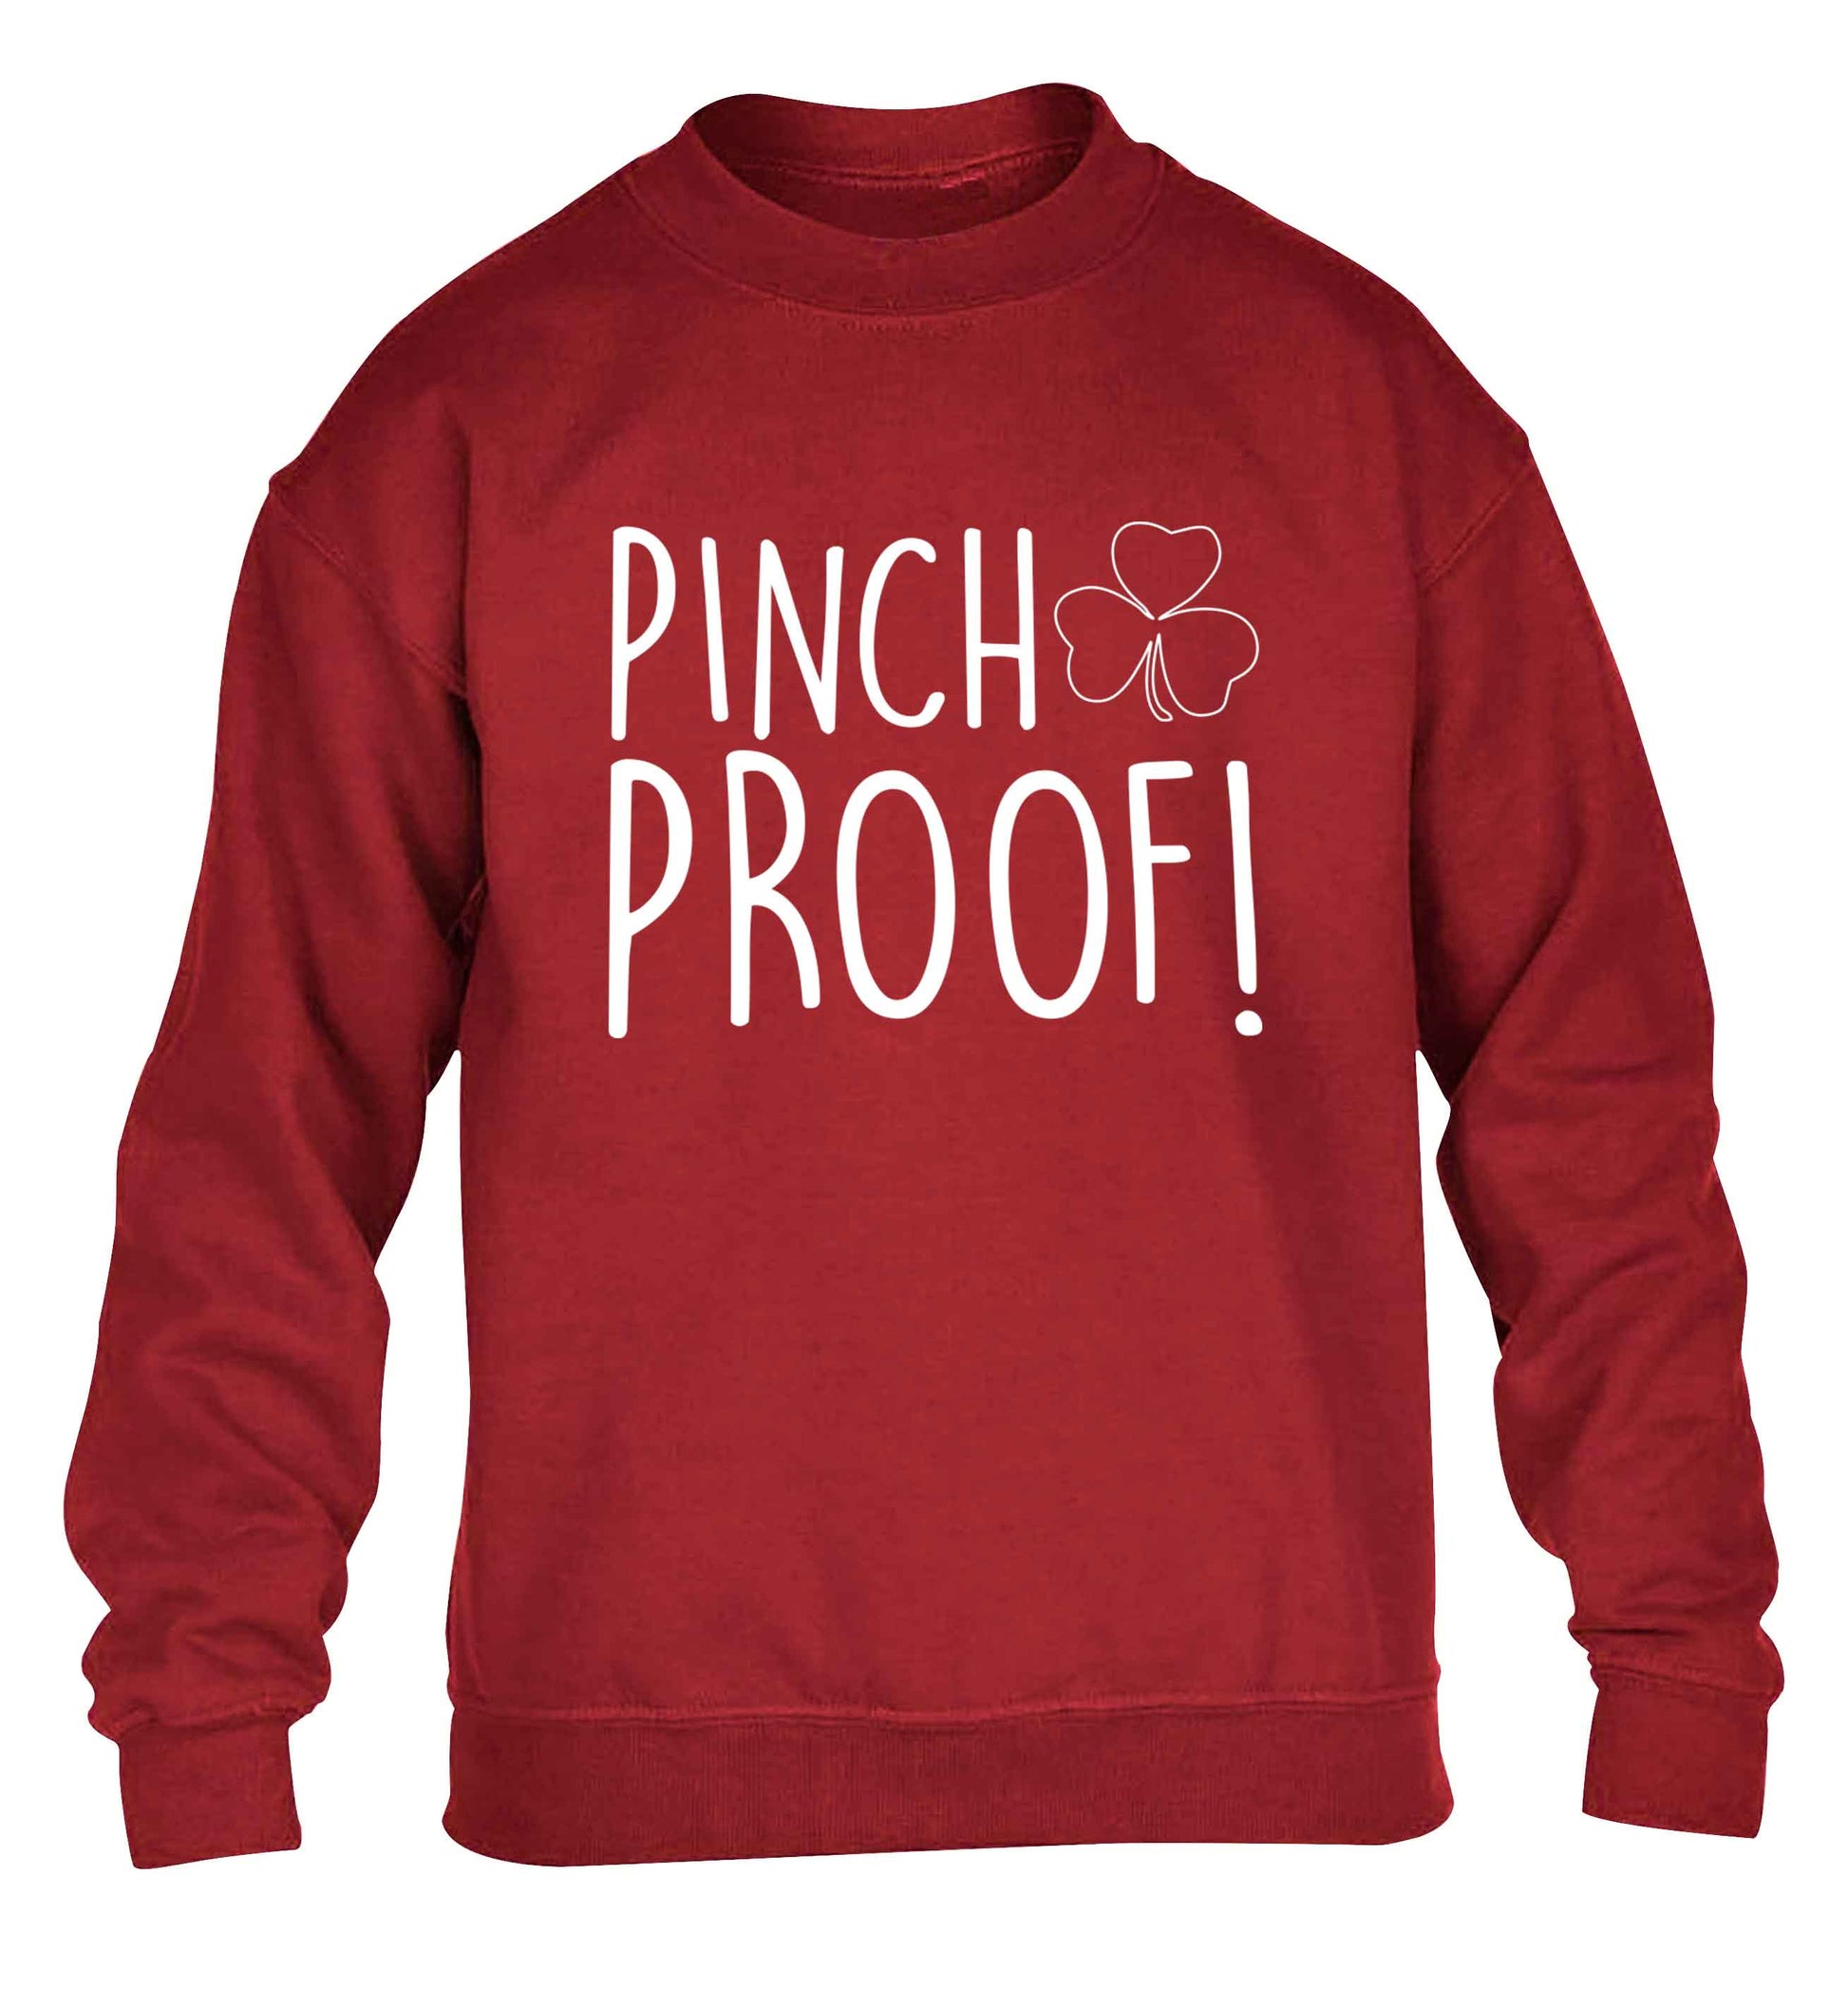 Pinch Proof children's grey sweater 12-13 Years